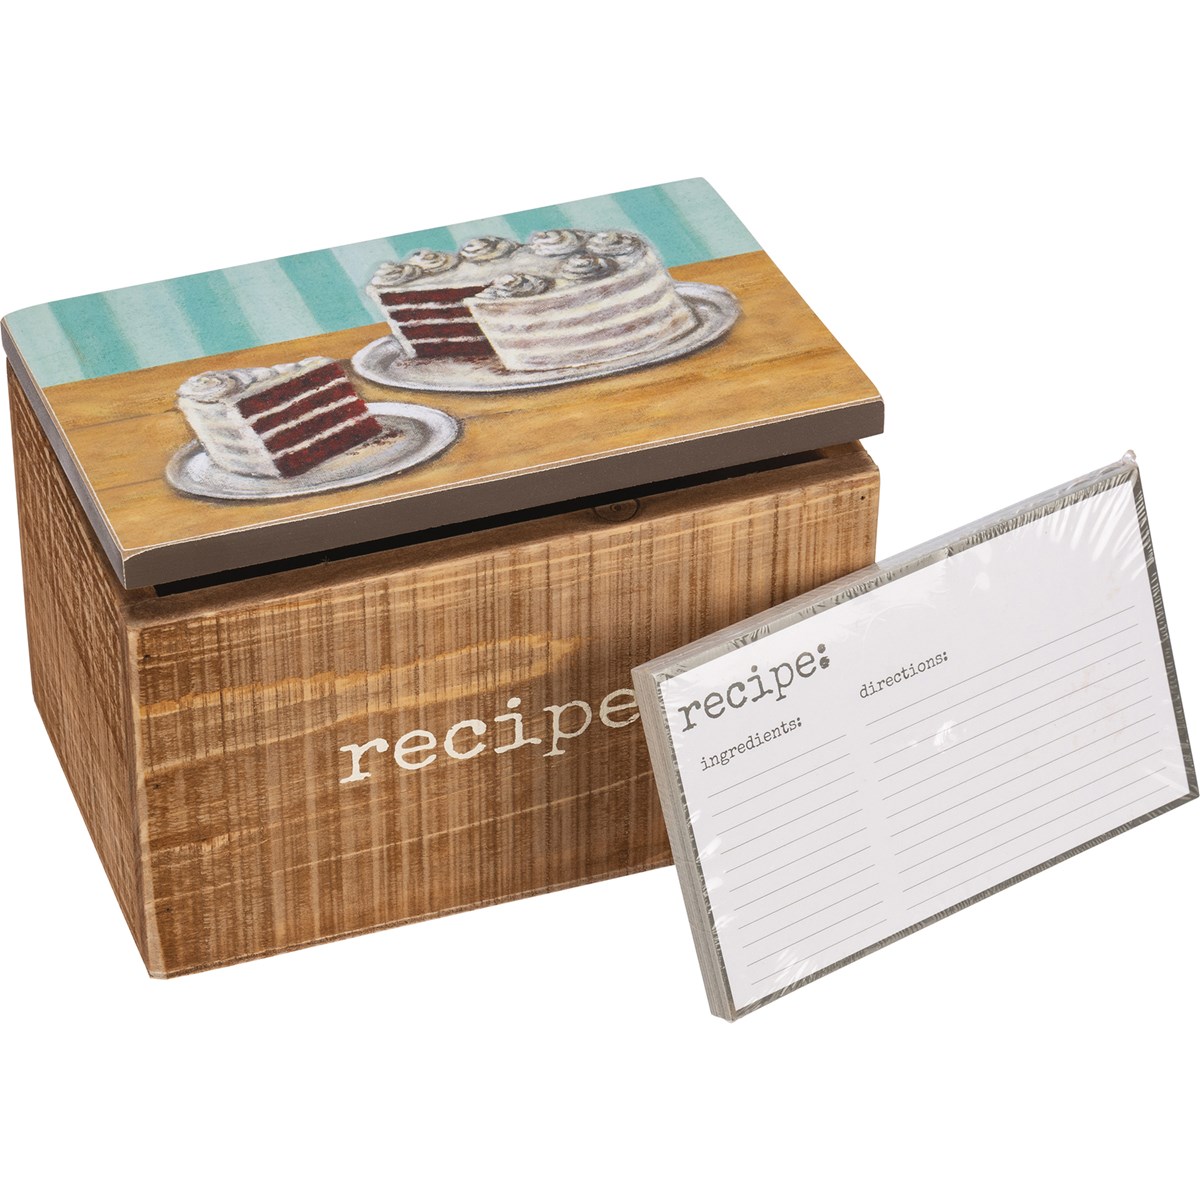 Recipe Box - Red Velvet Cake - 6.25" x 4" x 4" - Wood, Paper, Metal